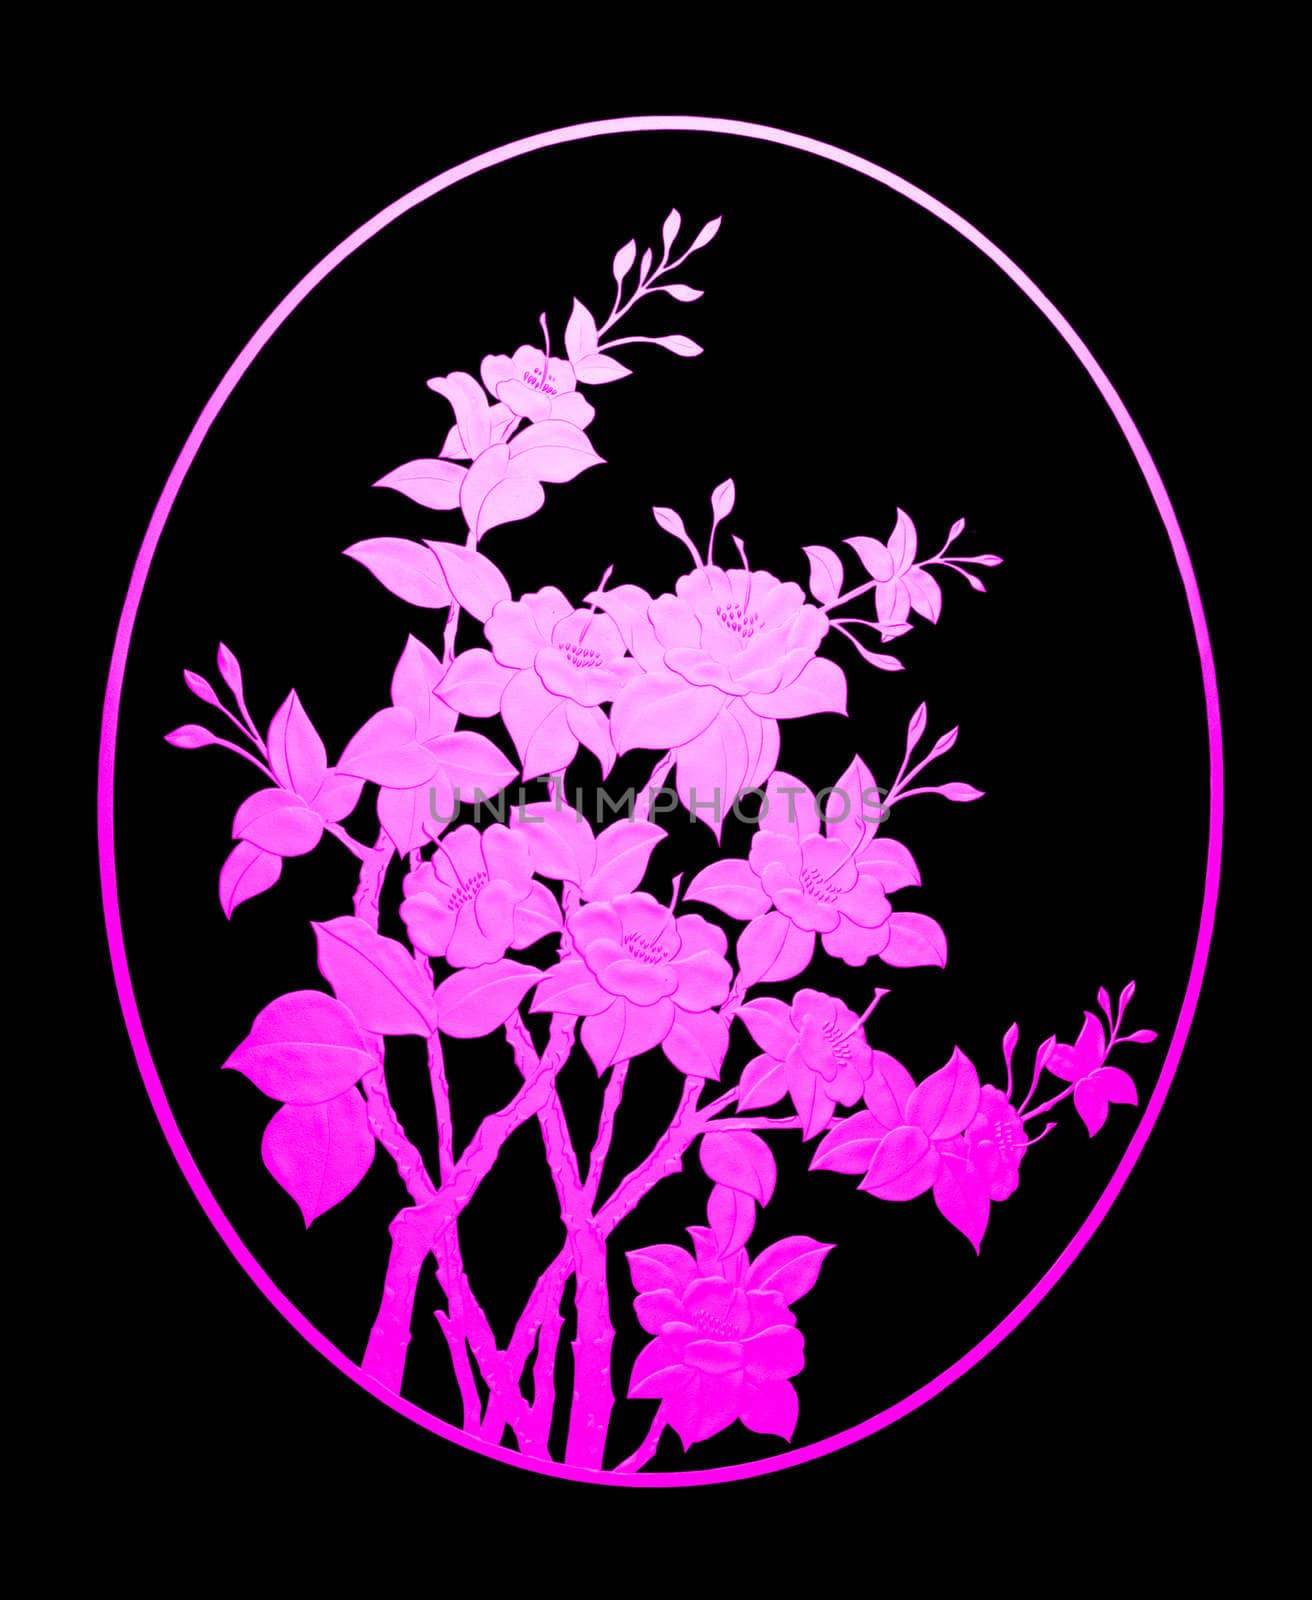 Pattern pink flower of glass on black background by Gamjai